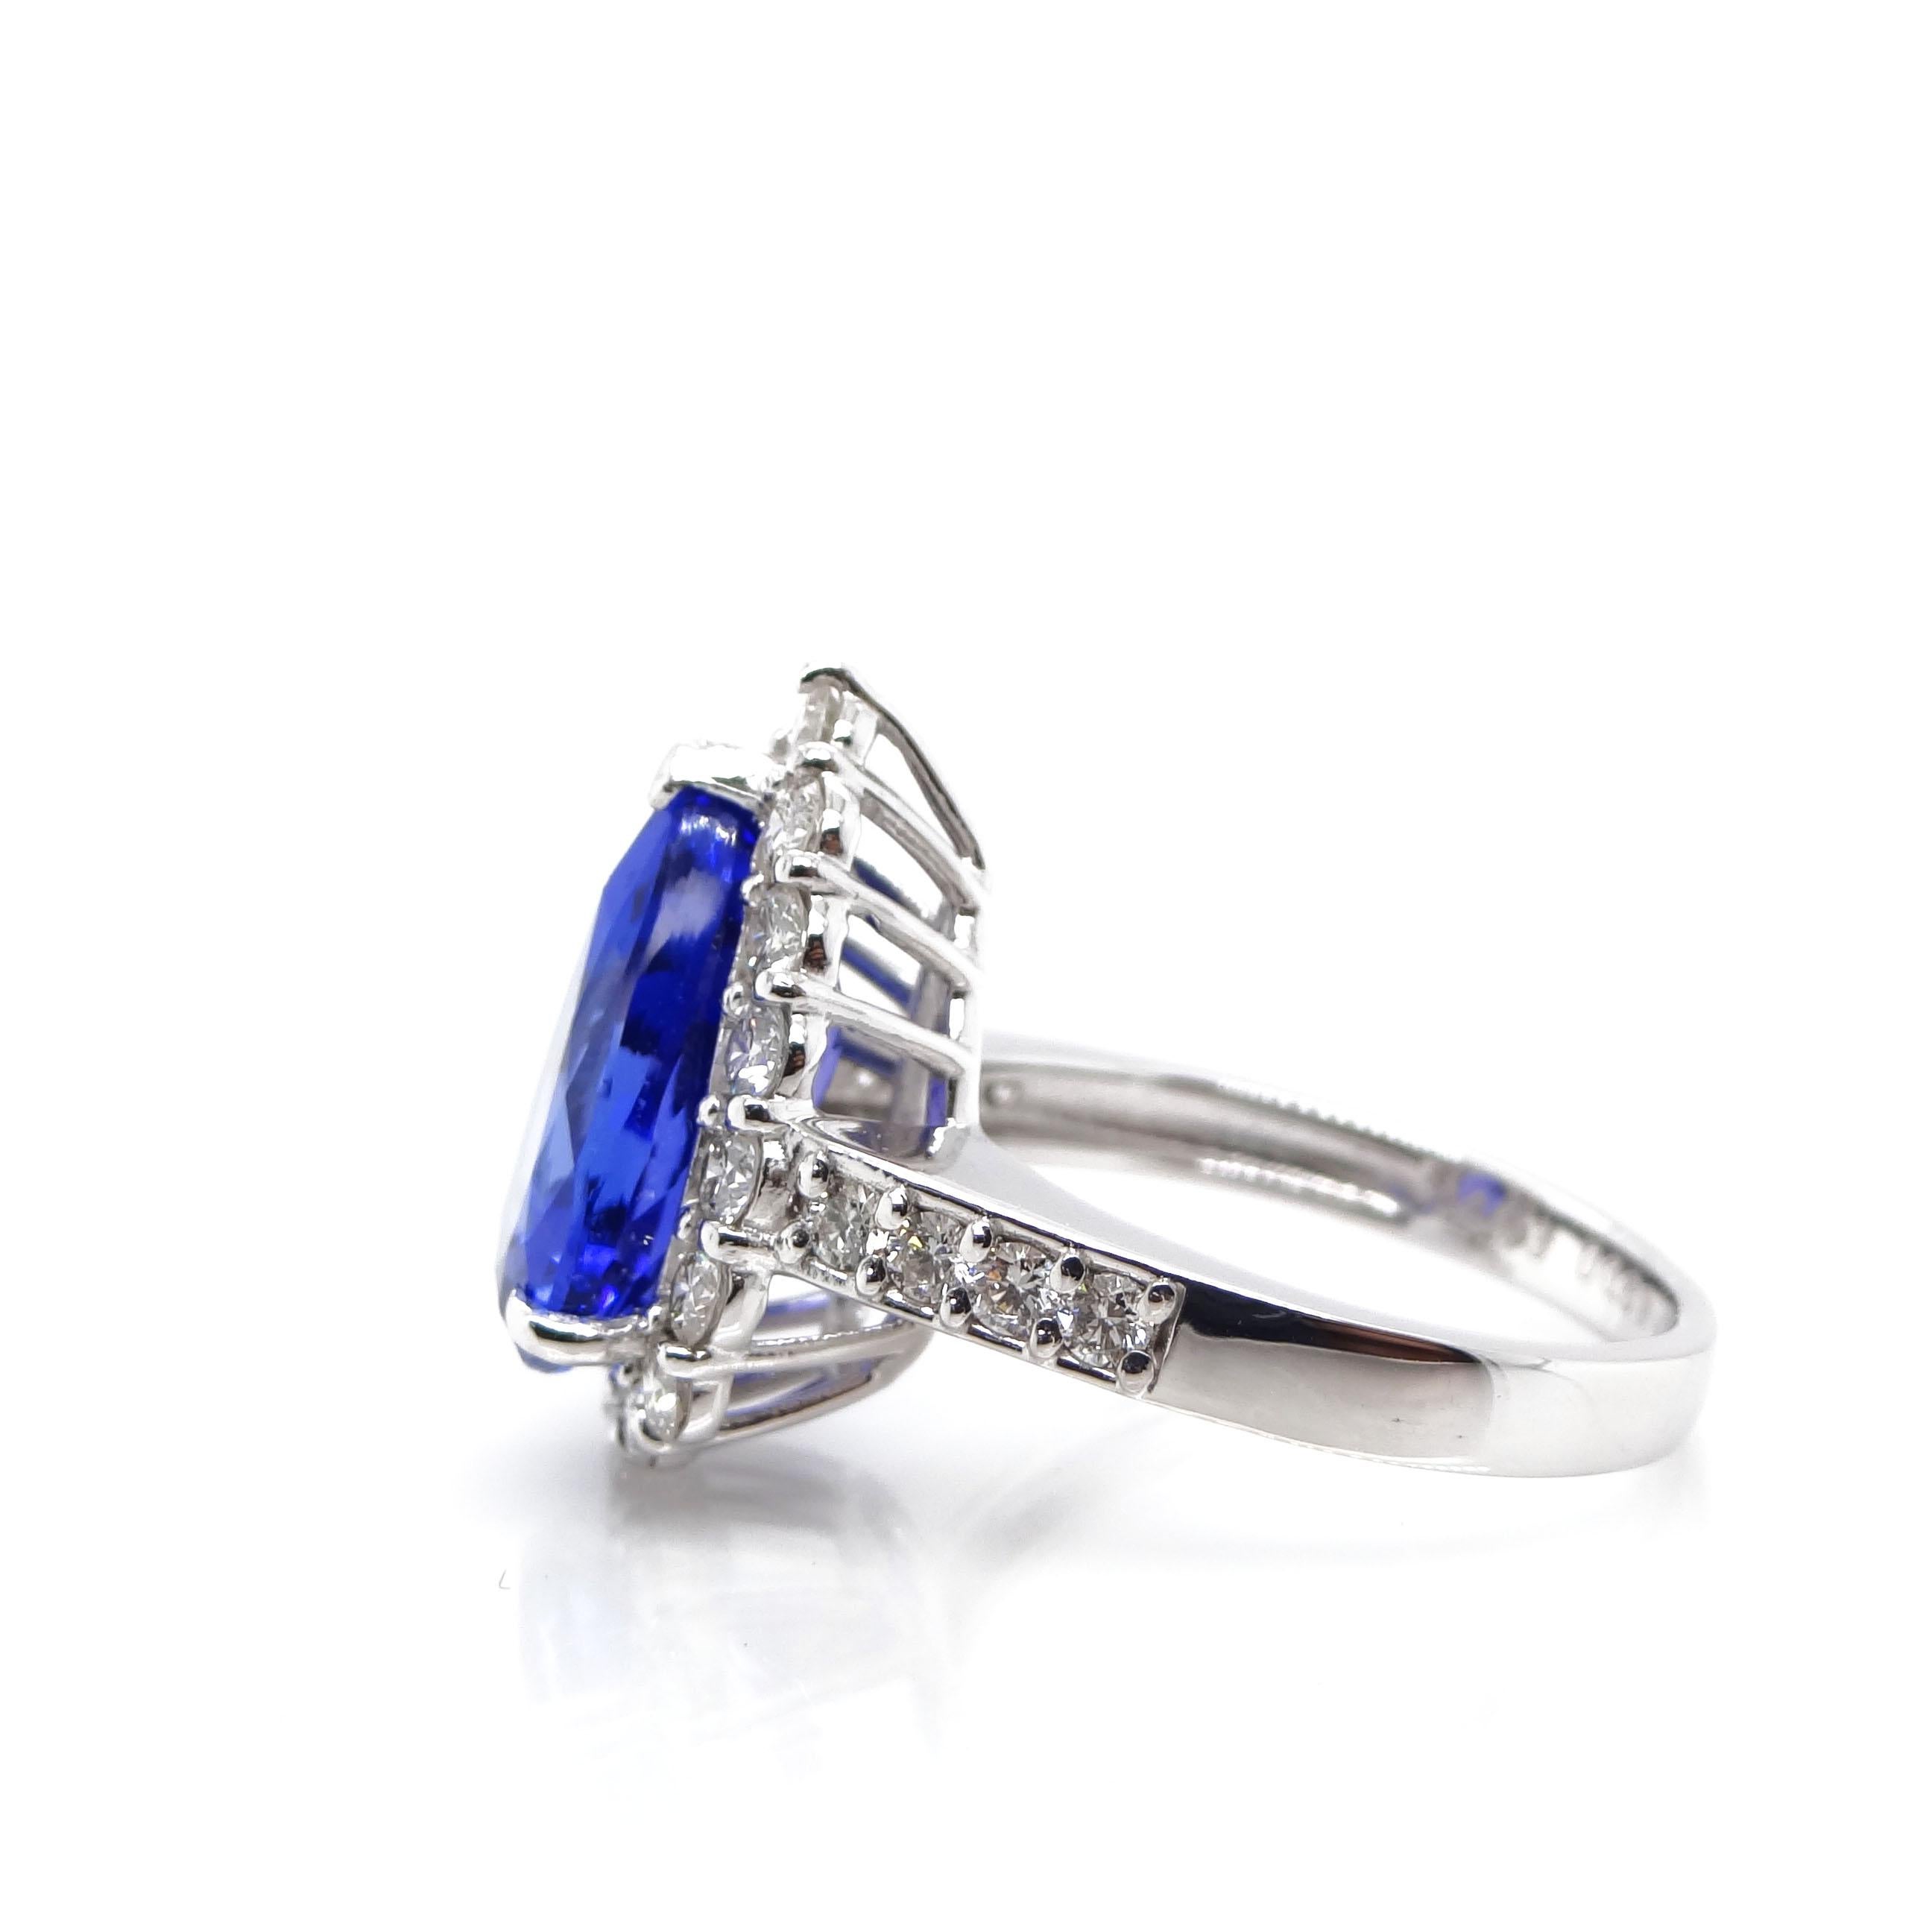 Pear Cut 4.43 Carat Pear-Shaped Tanzanite Diamond Engagement Ring Set in Platinum